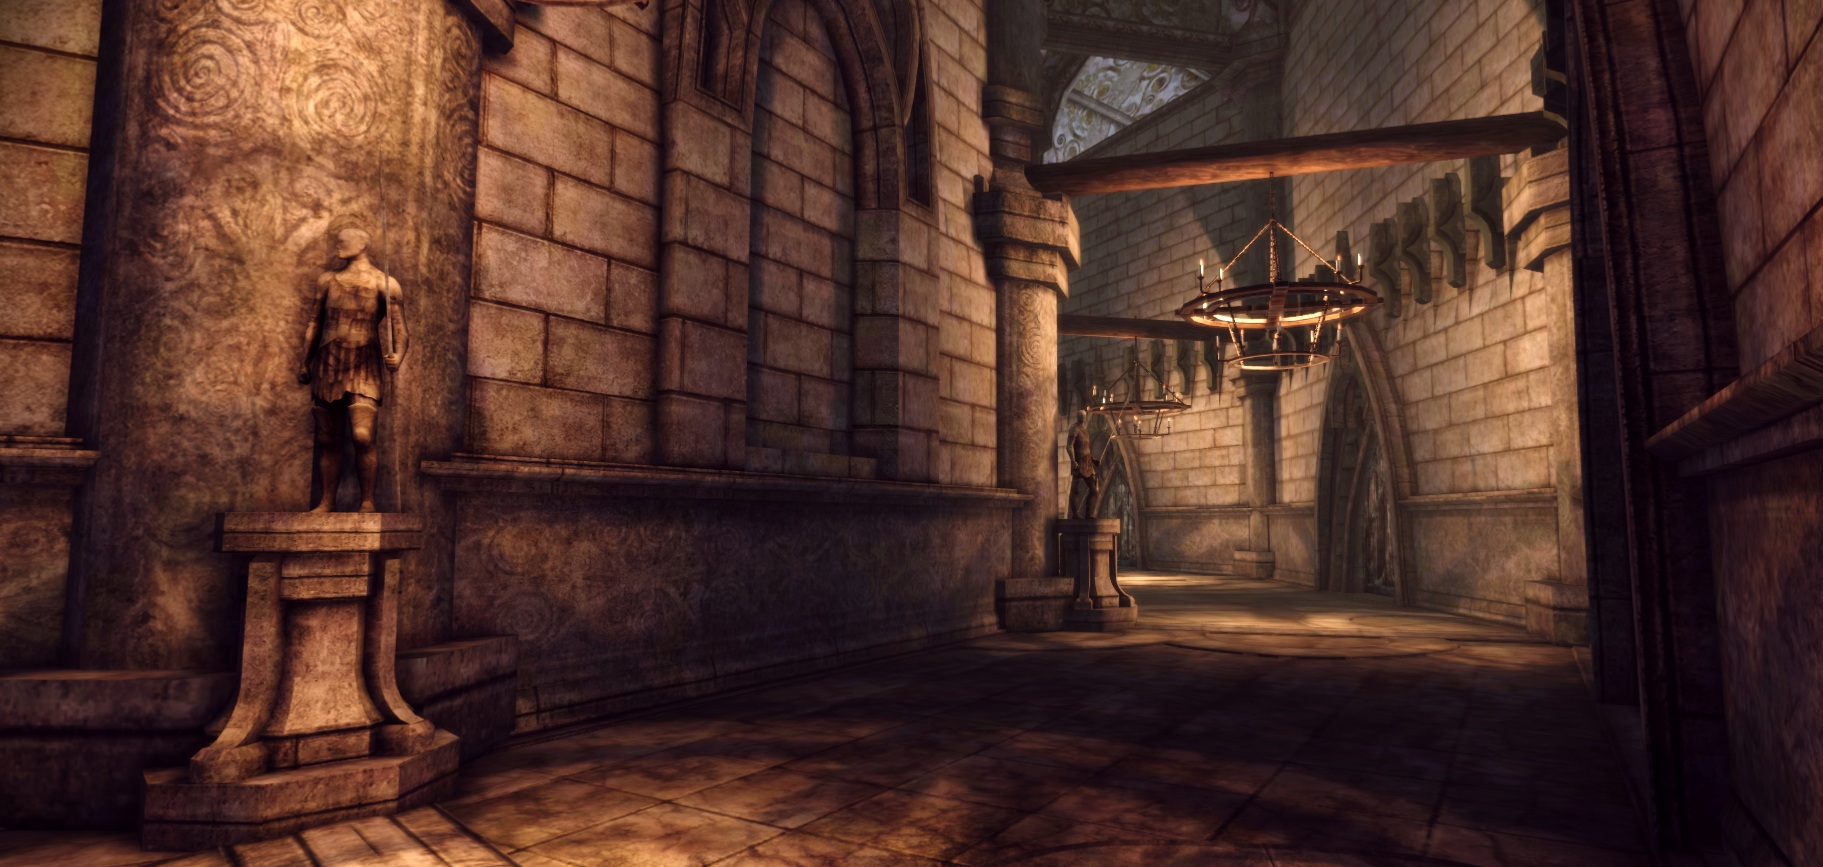 Dragon Age Origins, Part 6 / Broken Circle, Tower of Mages, Summoning  Sciences